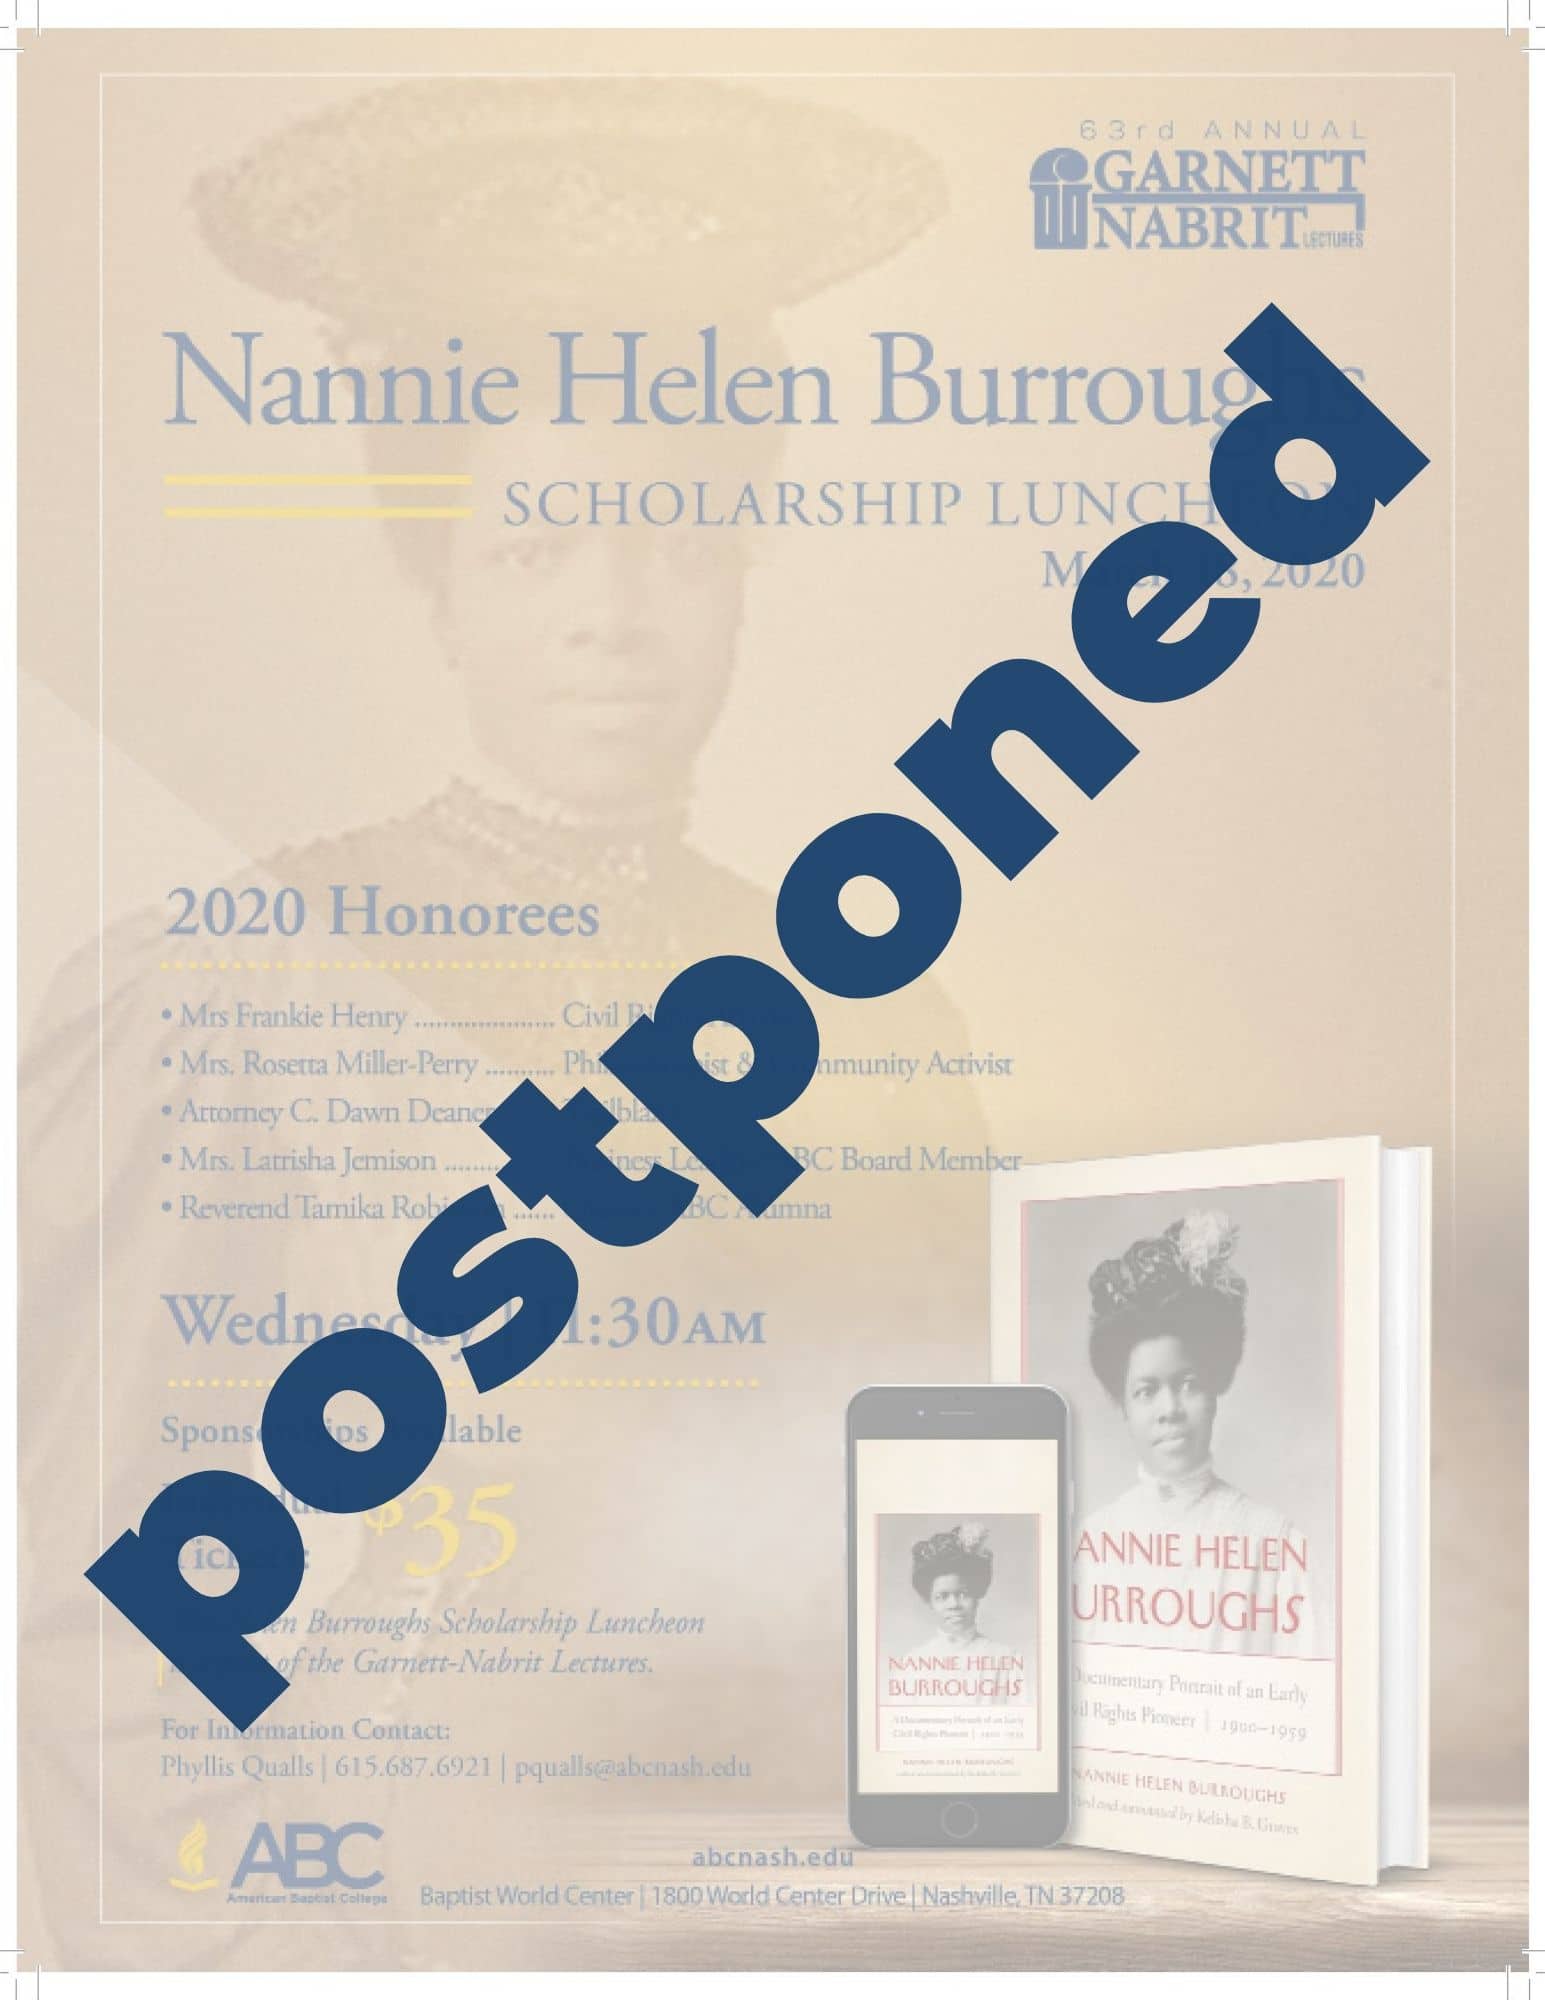 Nannie Helen Burroughs Button Civil Rights Leader 